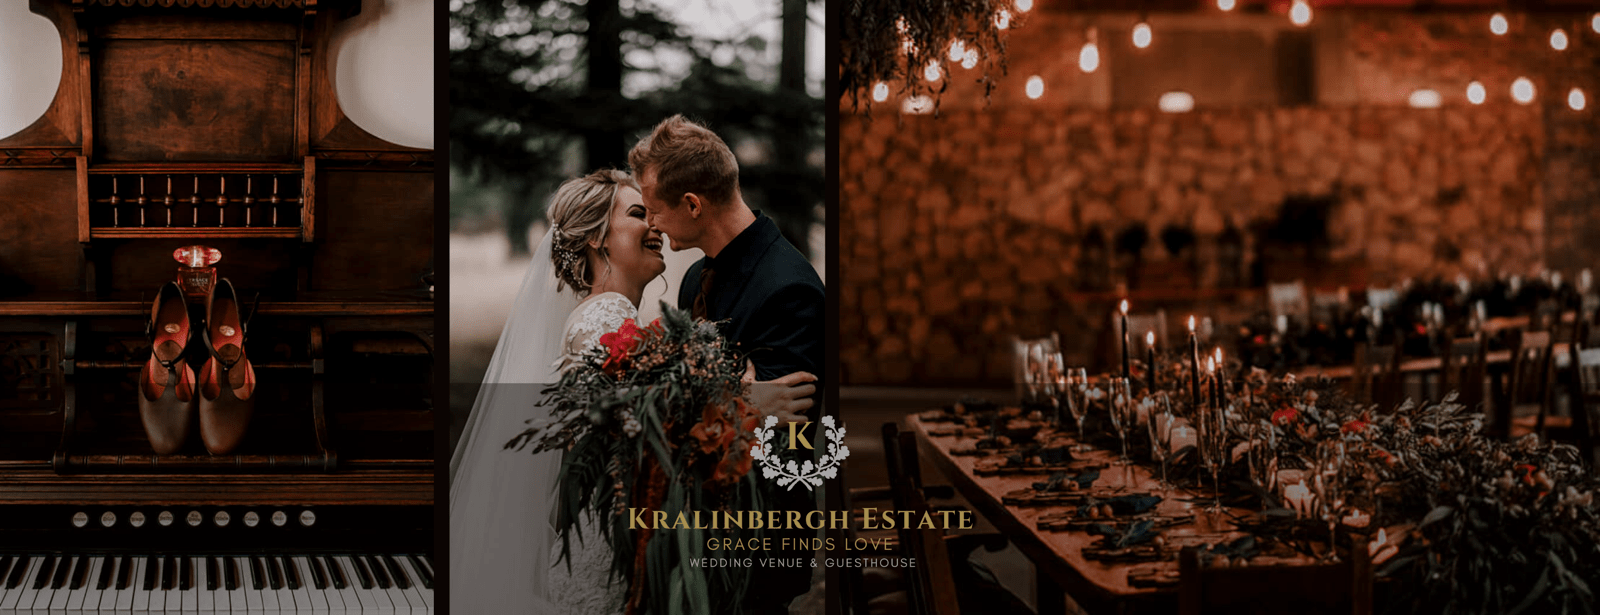 Kralinbergh Estate – Wedding Venue and Guesthouse